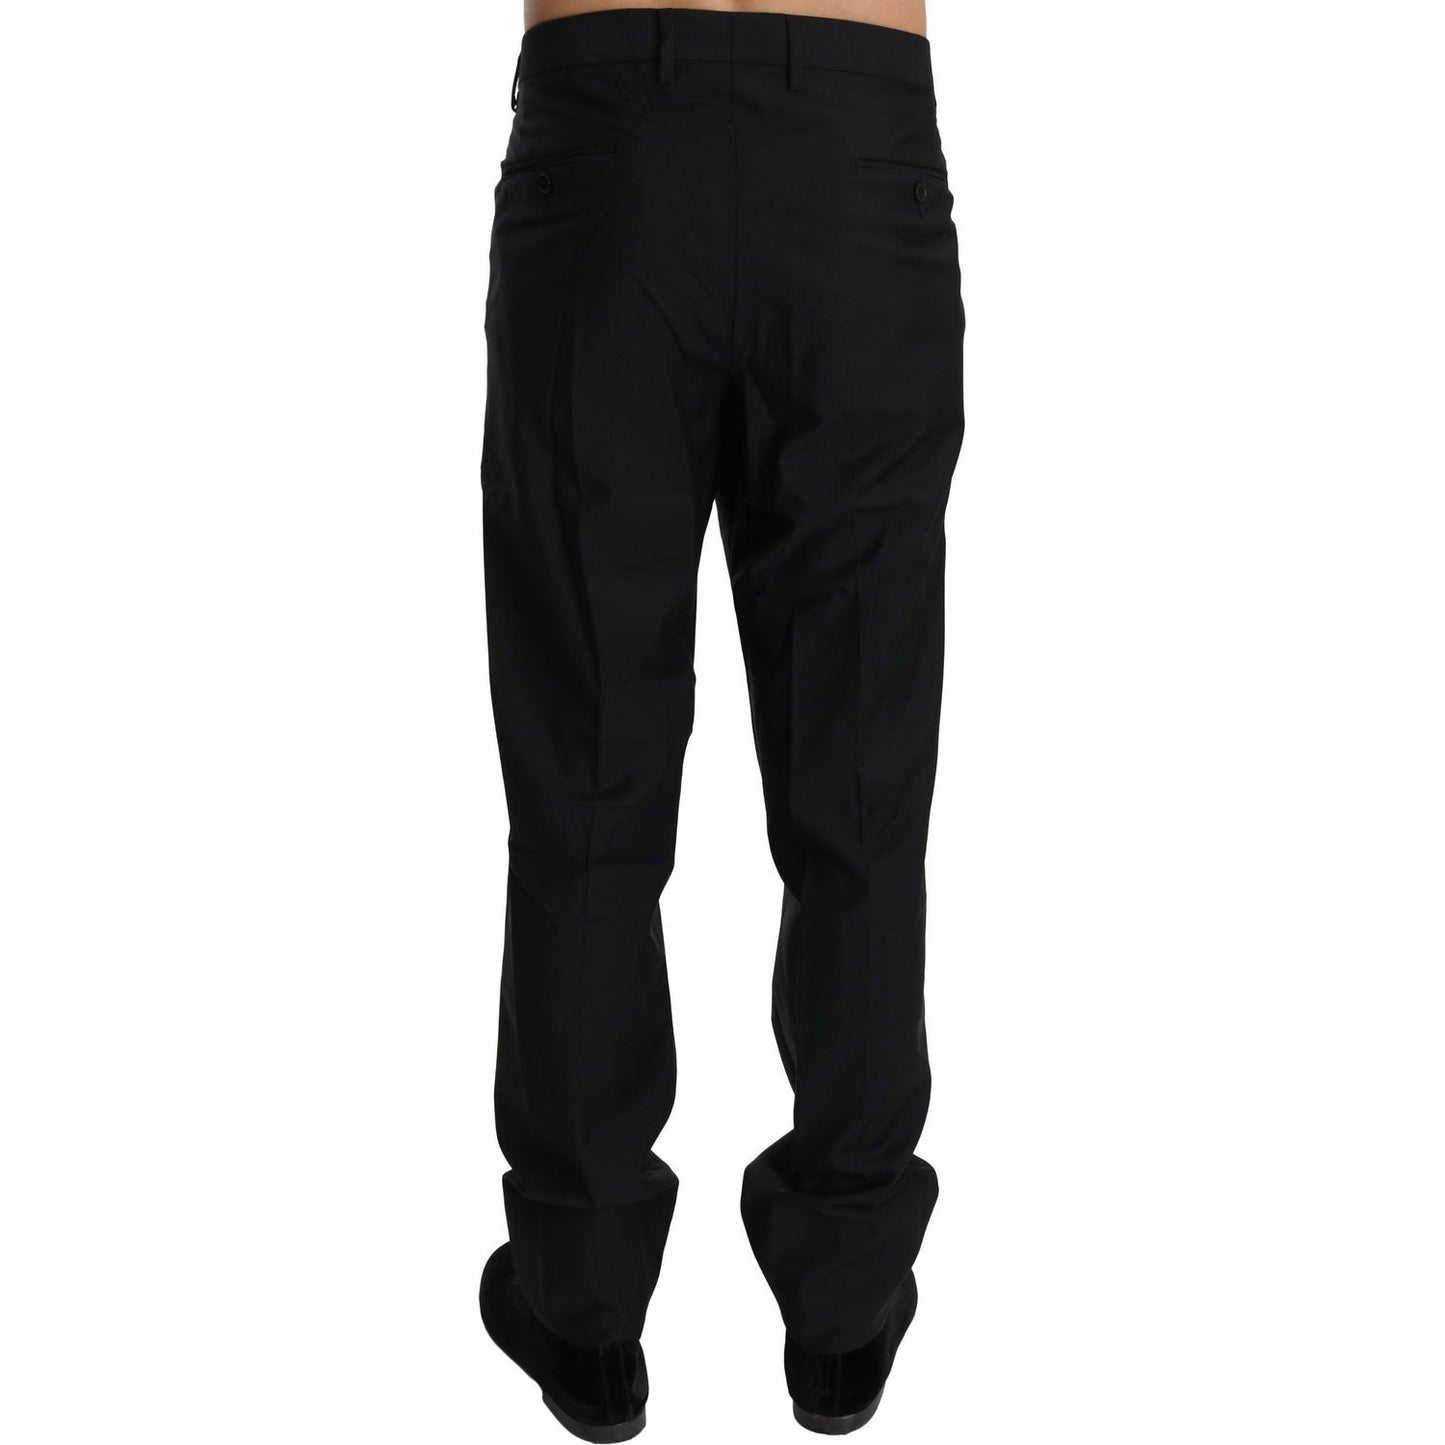 Dolce & Gabbana Elegant Black Virgin Wool Dress Pants black-dress-formal-trouser-men-wool-pants Jeans & Pants IMG_1230-1-scaled-a738447e-35c.jpg